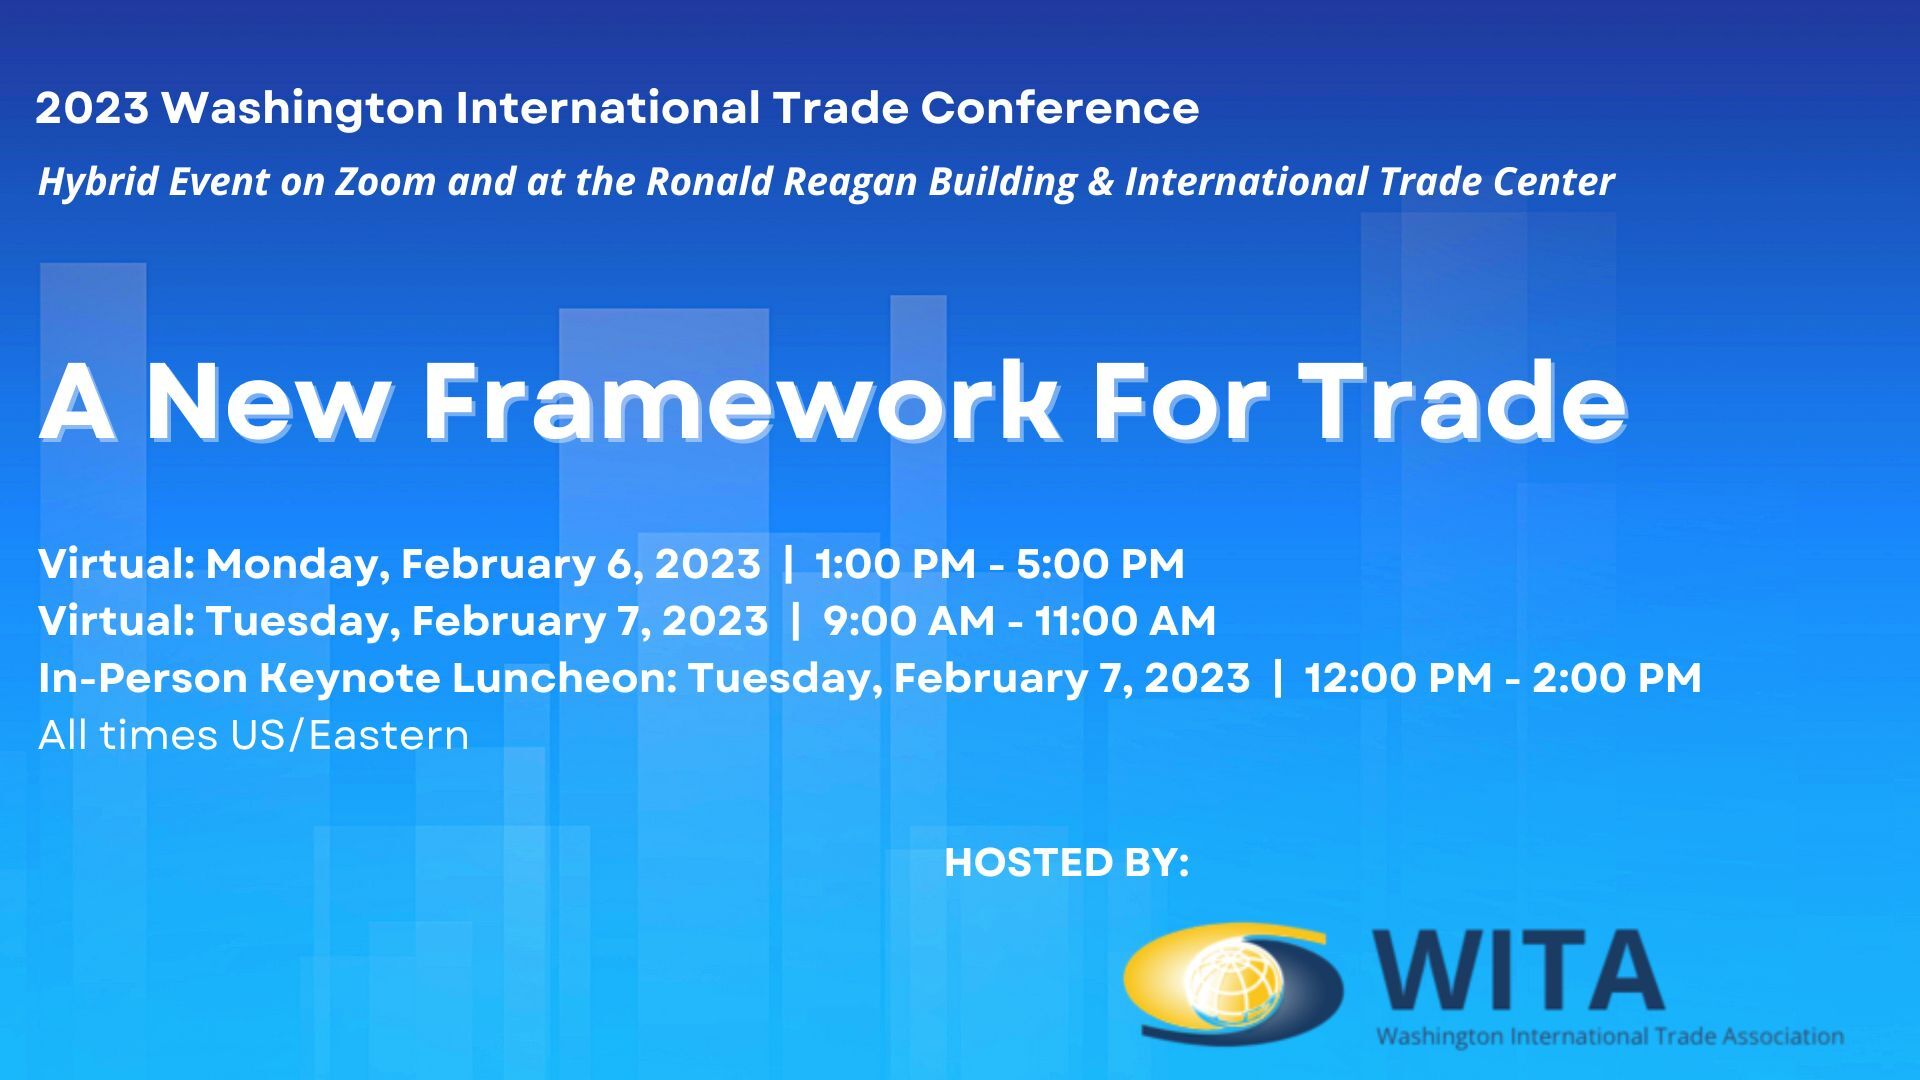 Washington International Trade Conference Sponsorship Opportunities